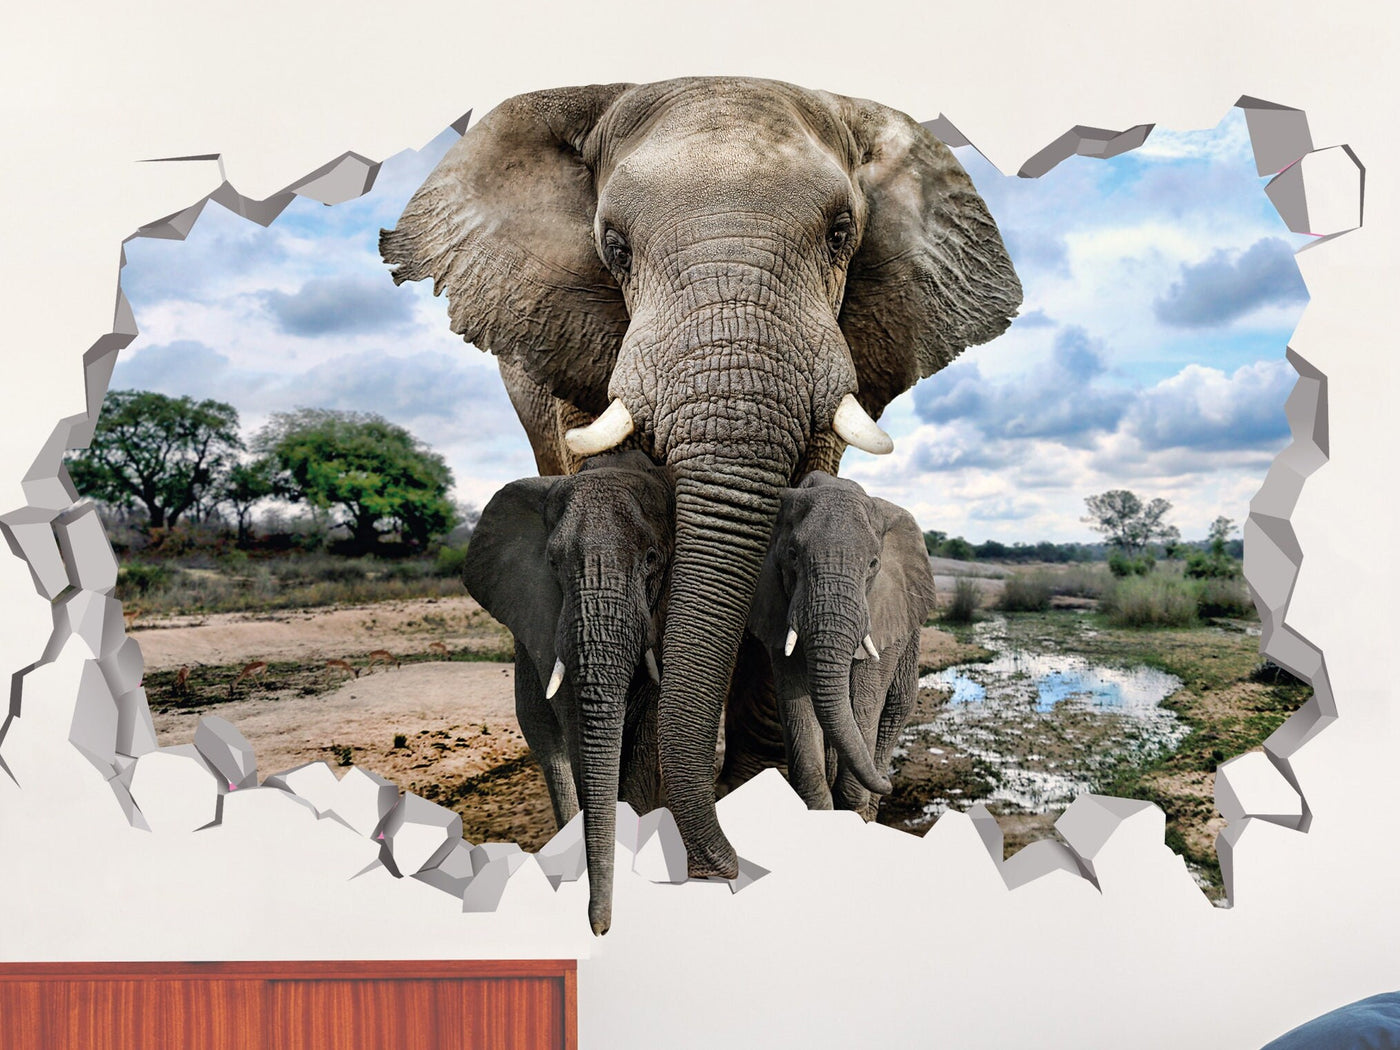 Elephant Wall Decal - Elephant Nursery - Elephant Decoration